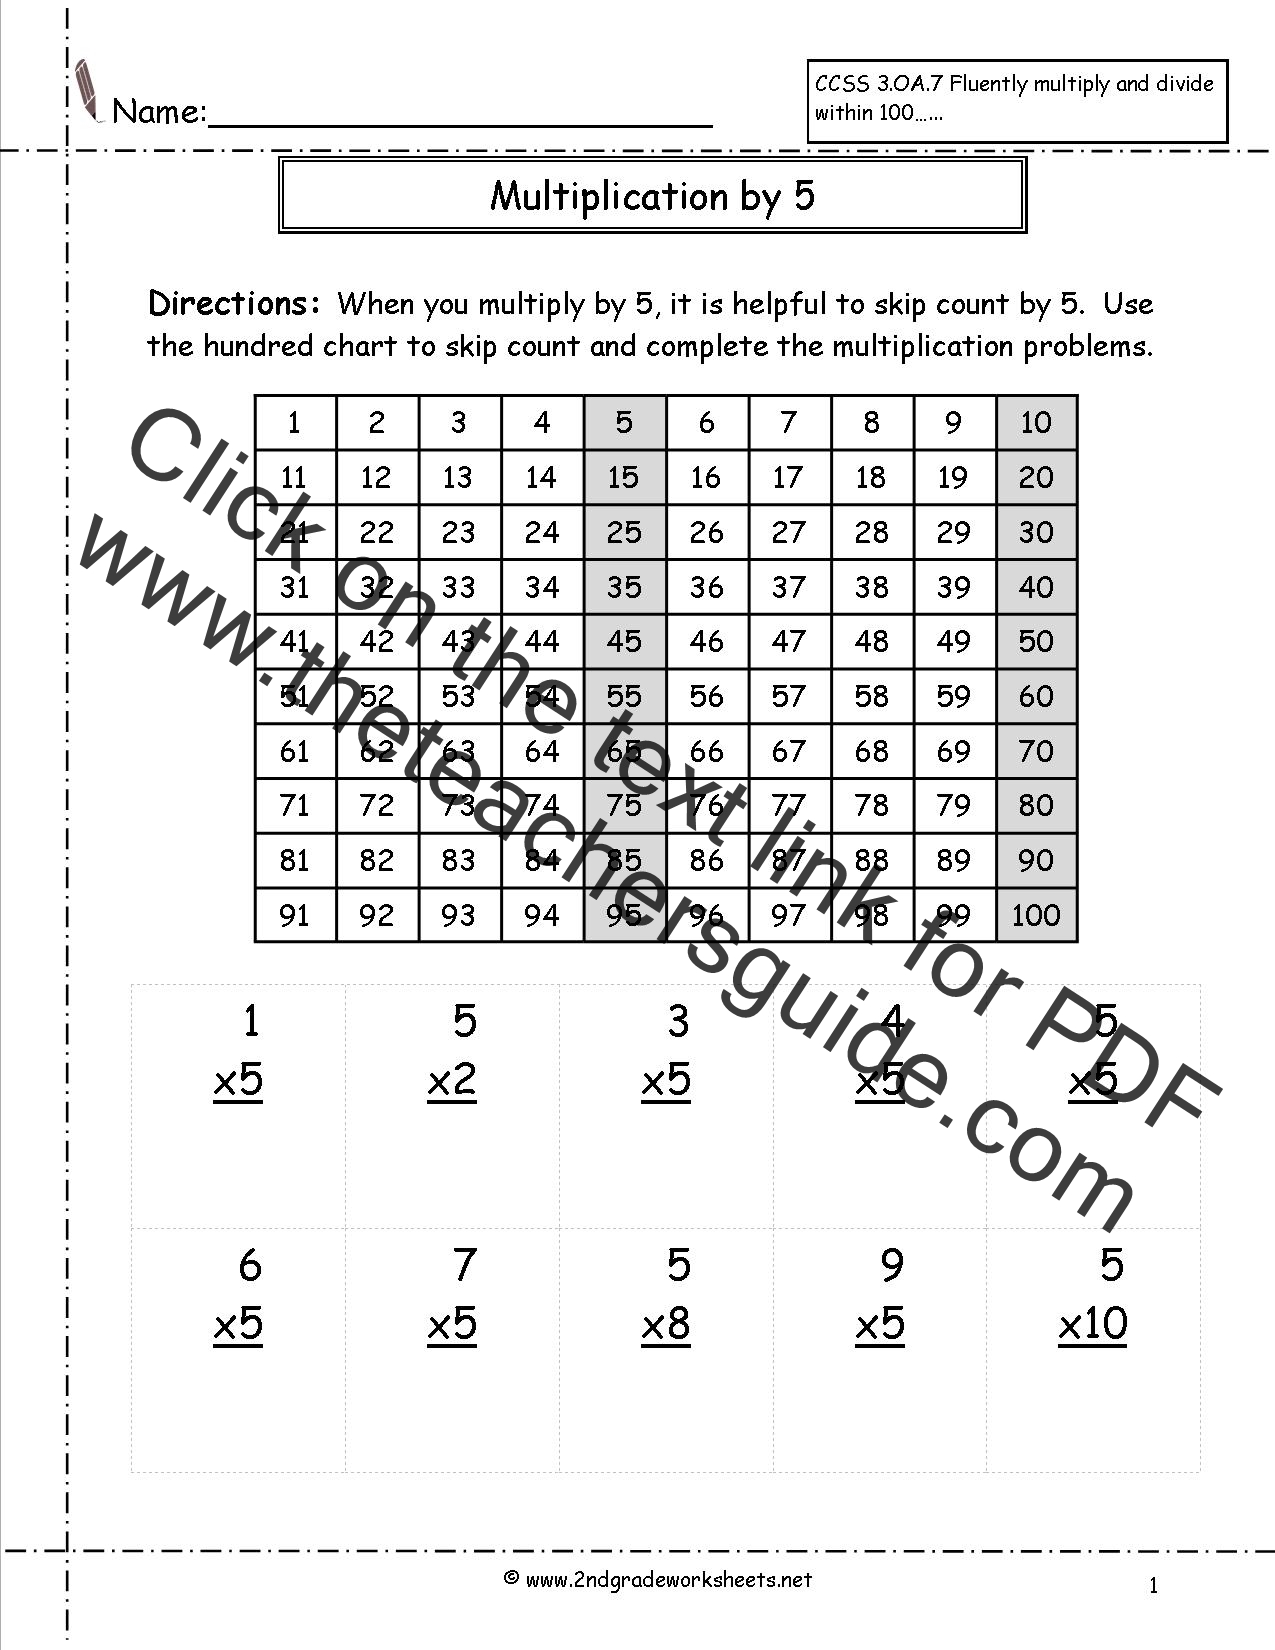 multiplication-worksheets-6-12-printablemultiplication